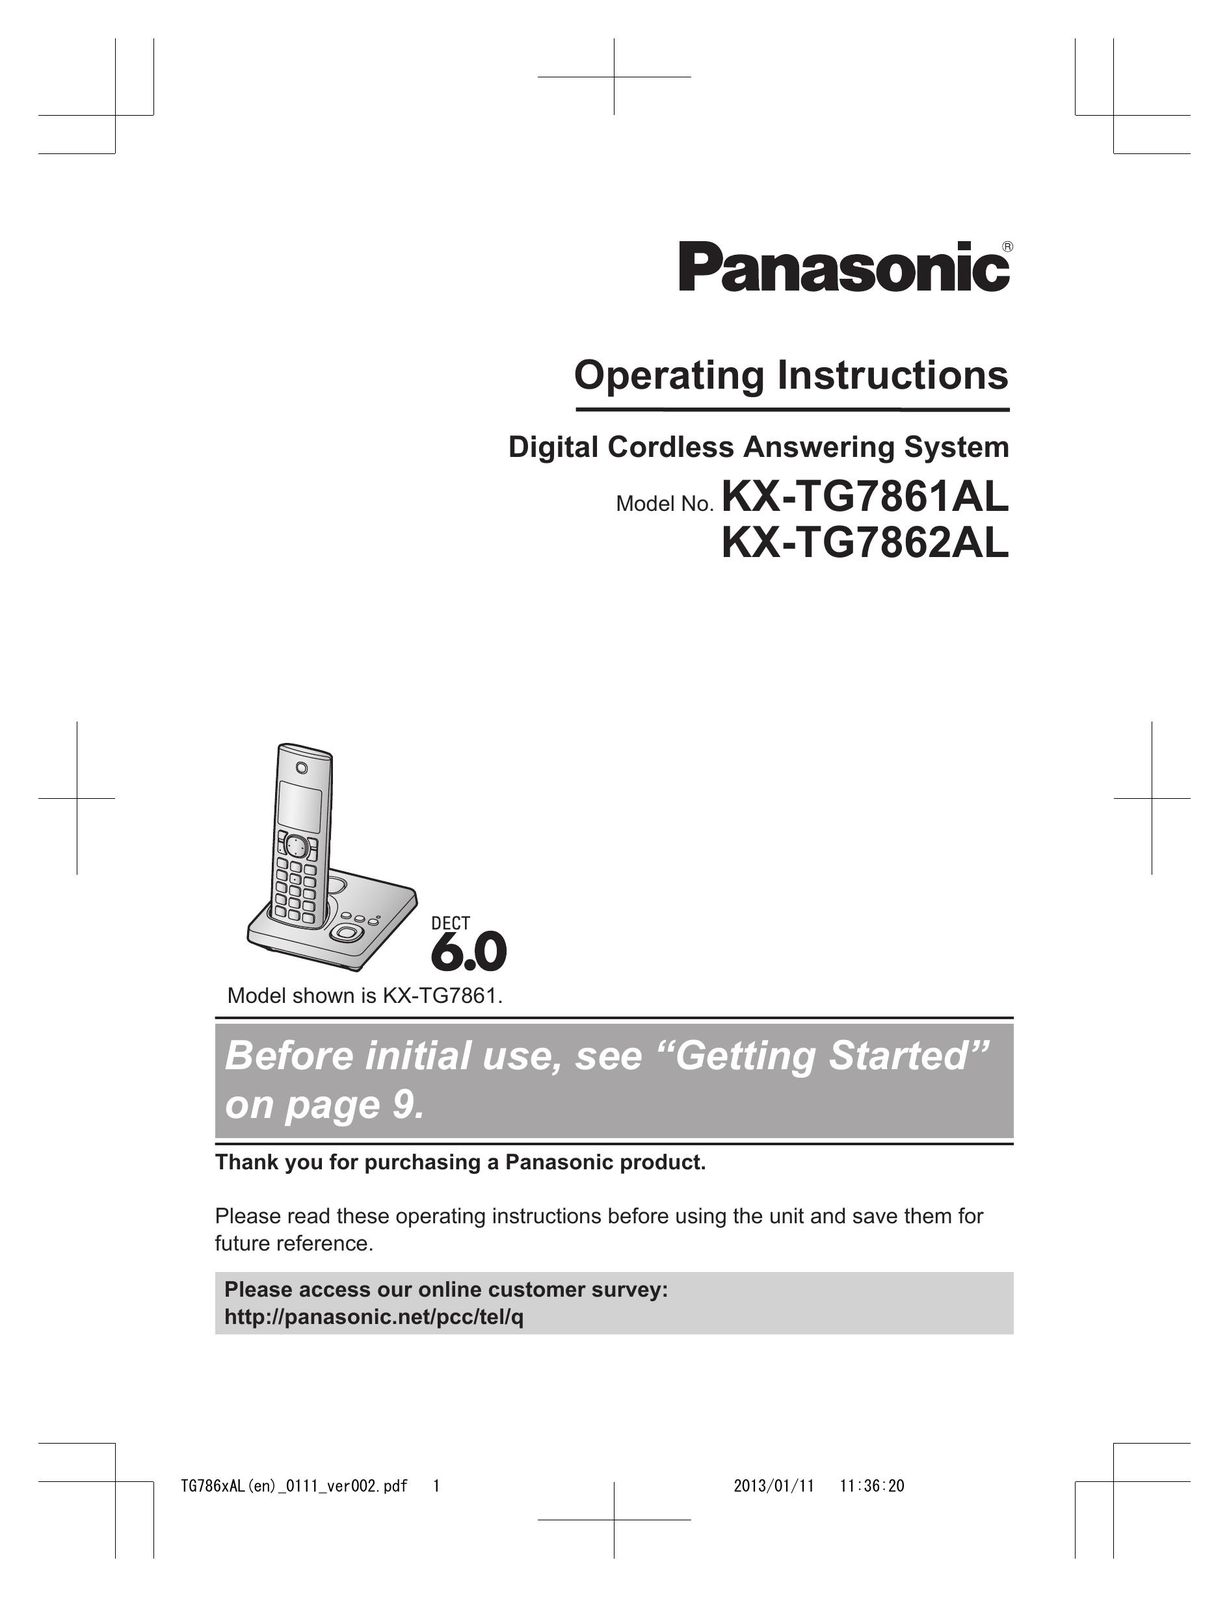 Panasonic KT-TG7861AL Answering Machine User Manual